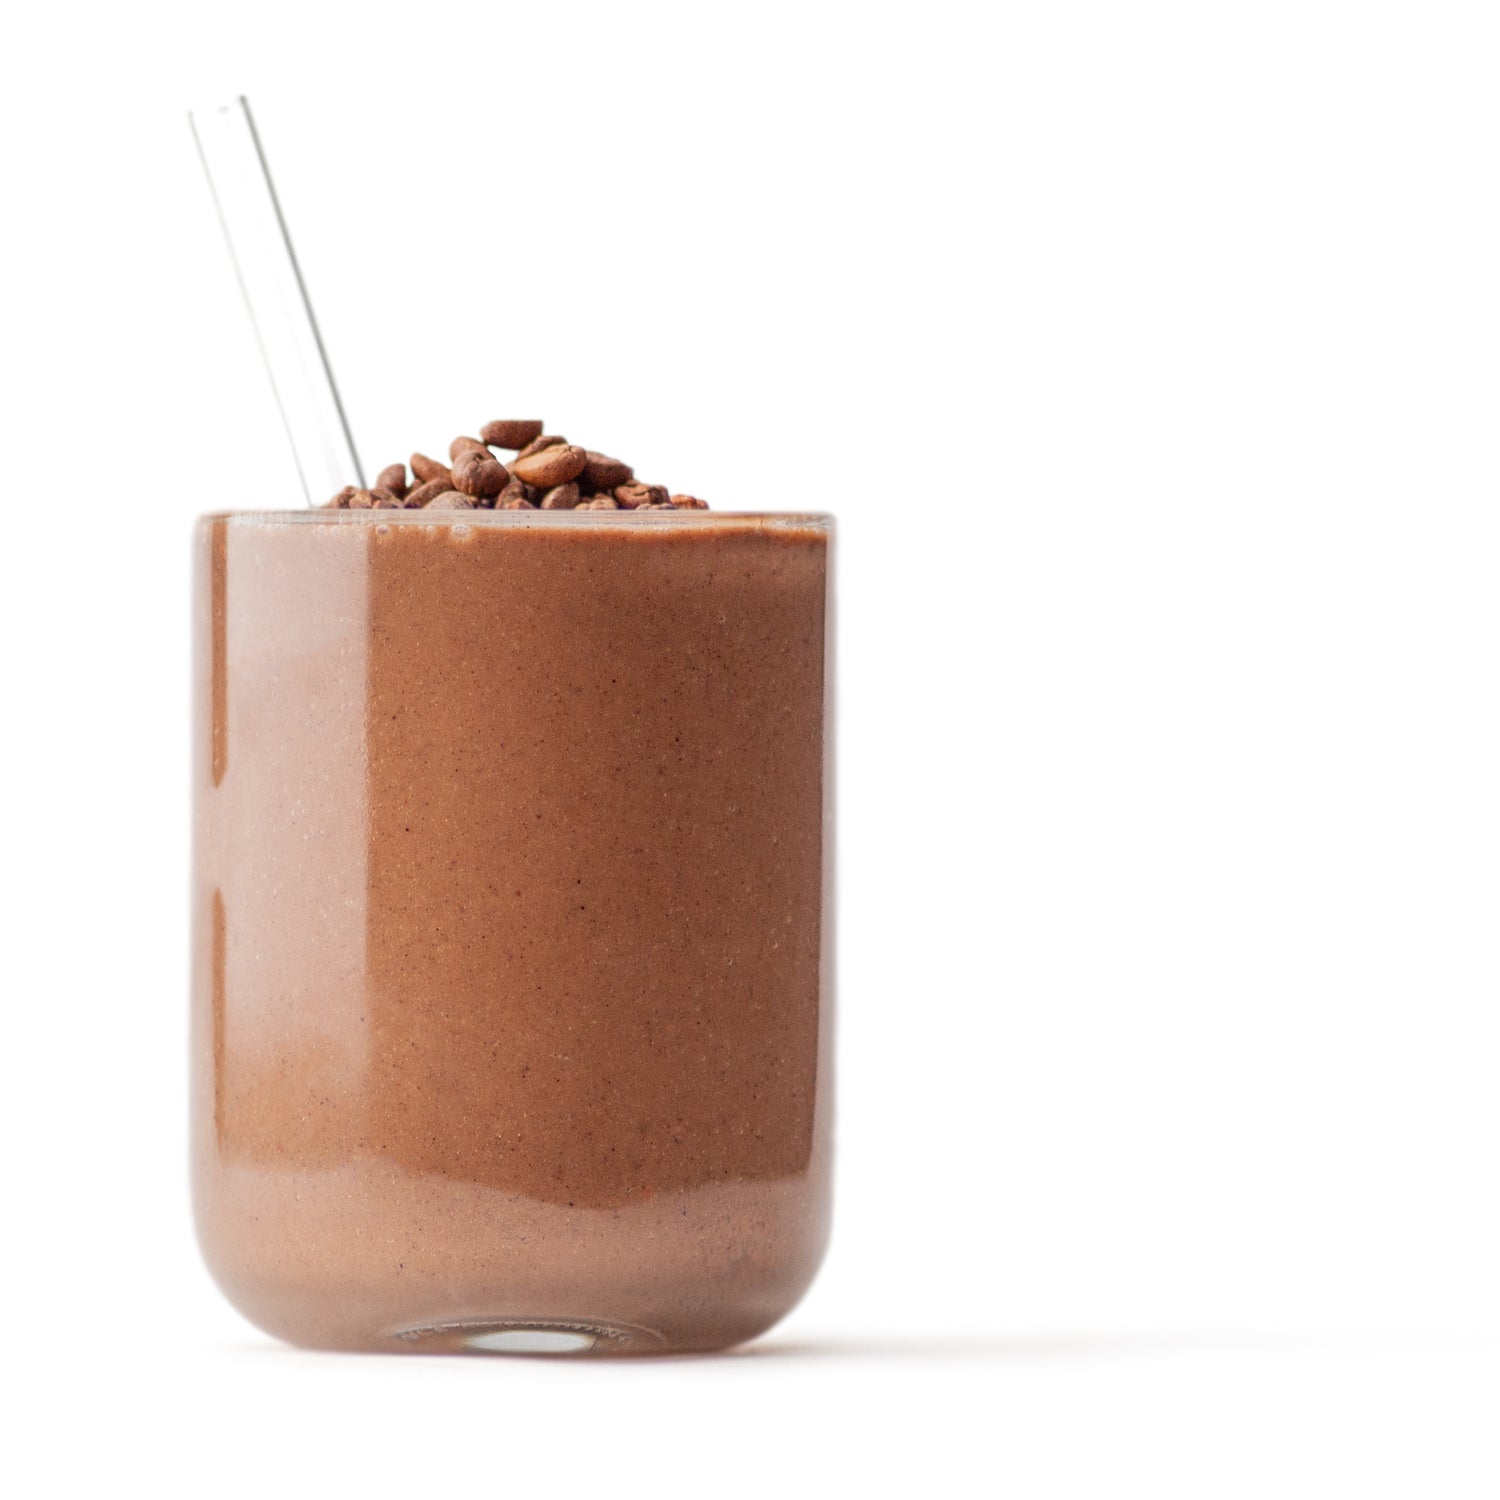 chocolate espresso smoothie in clear glass with glass straw